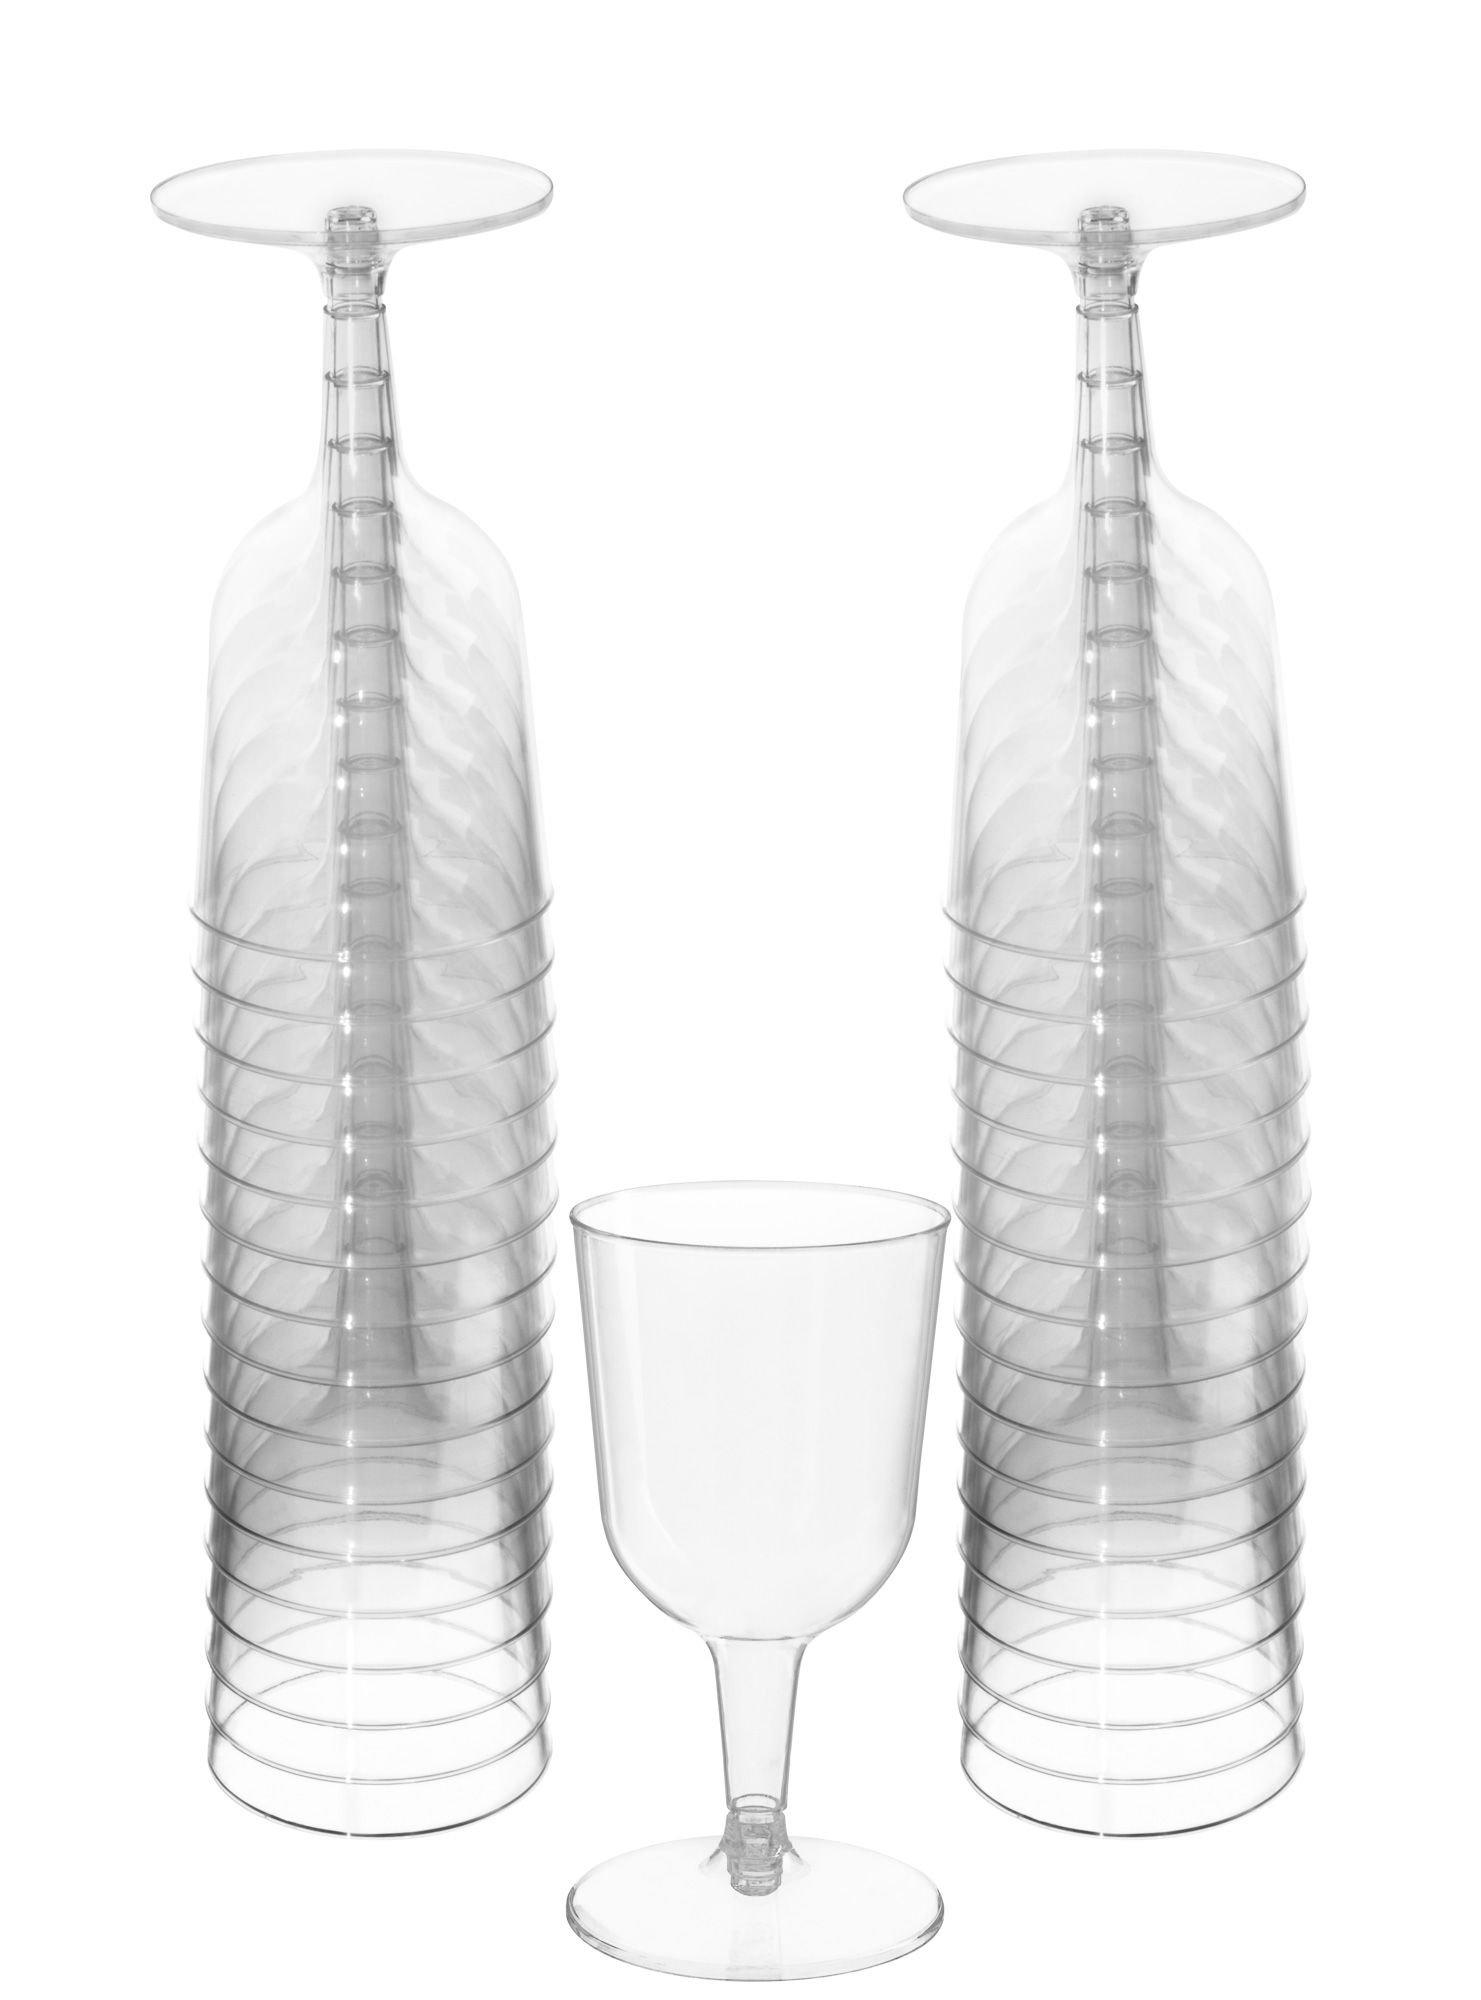 5.5oz Clear Plastic Wine Glasses 8ct